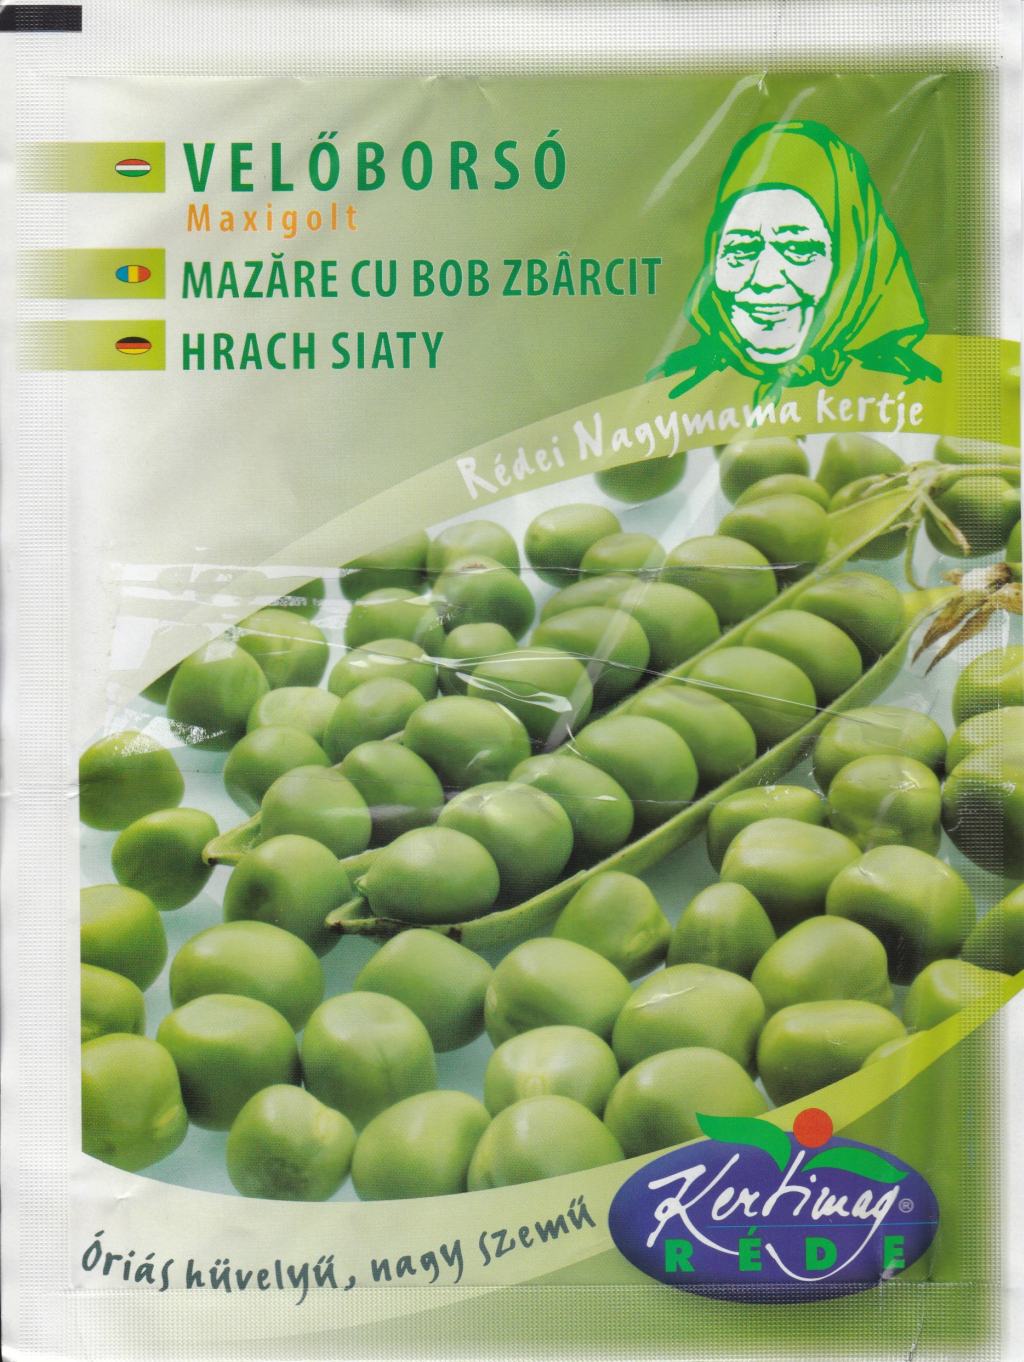 Green pea marrow Maxigolt 500 g